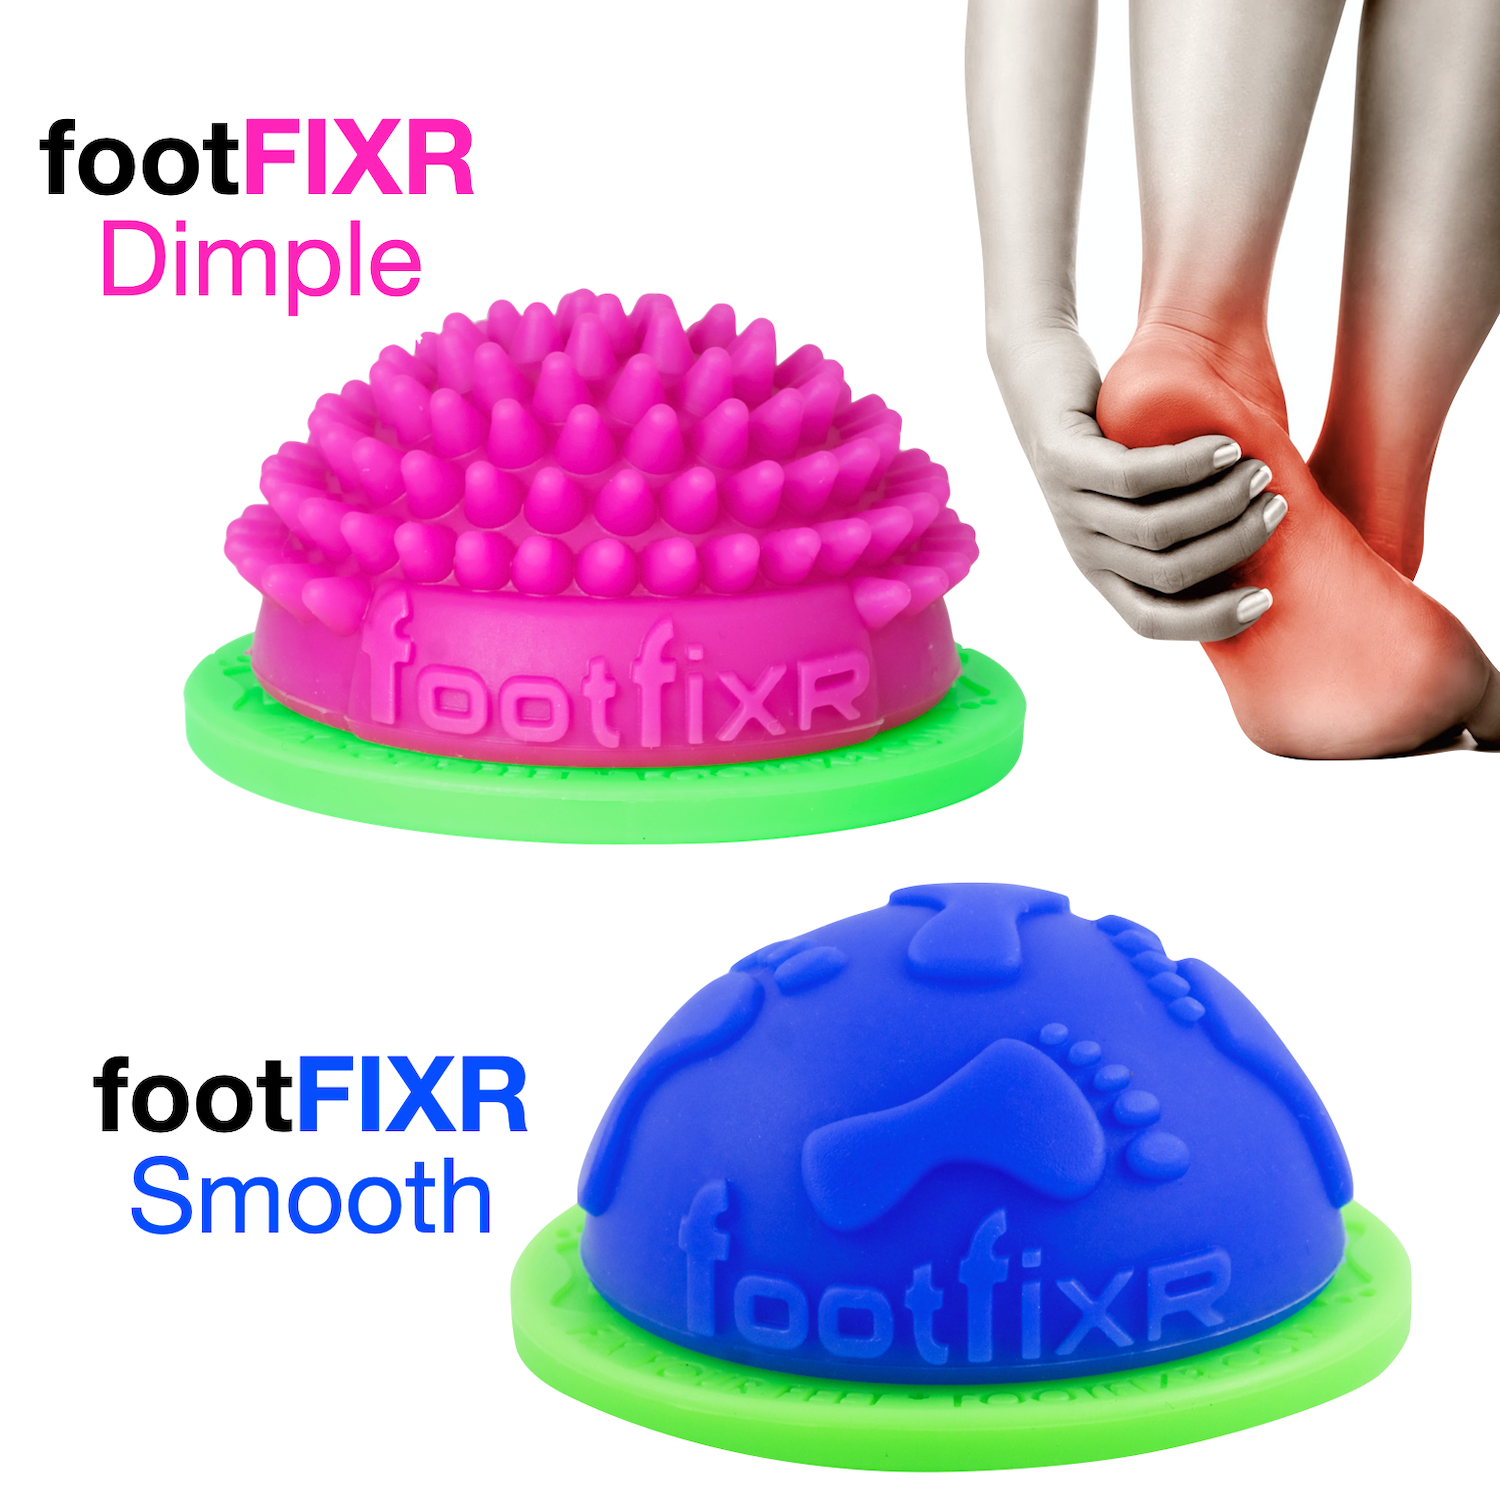 FootFIXR DIMPLE